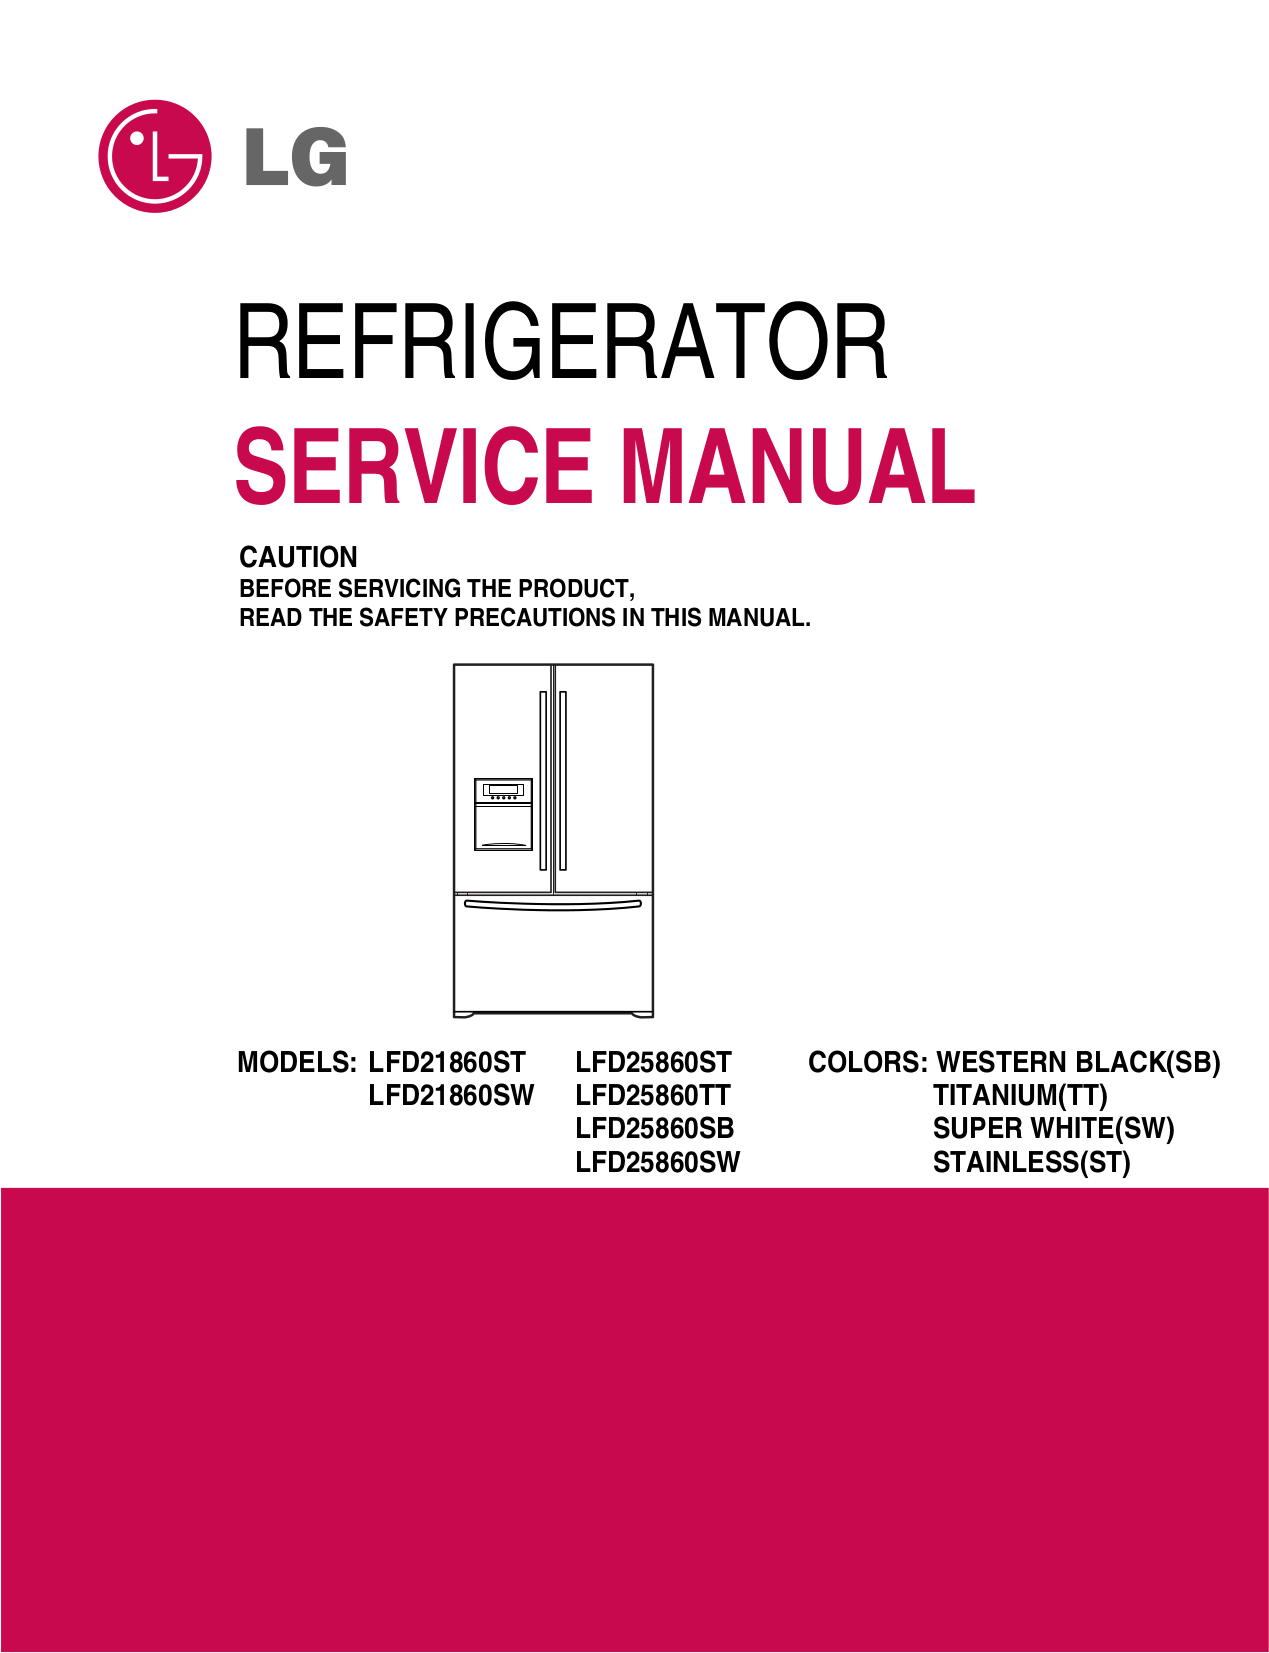 Download free pdf for LG LFD21860ST Refrigerator manual